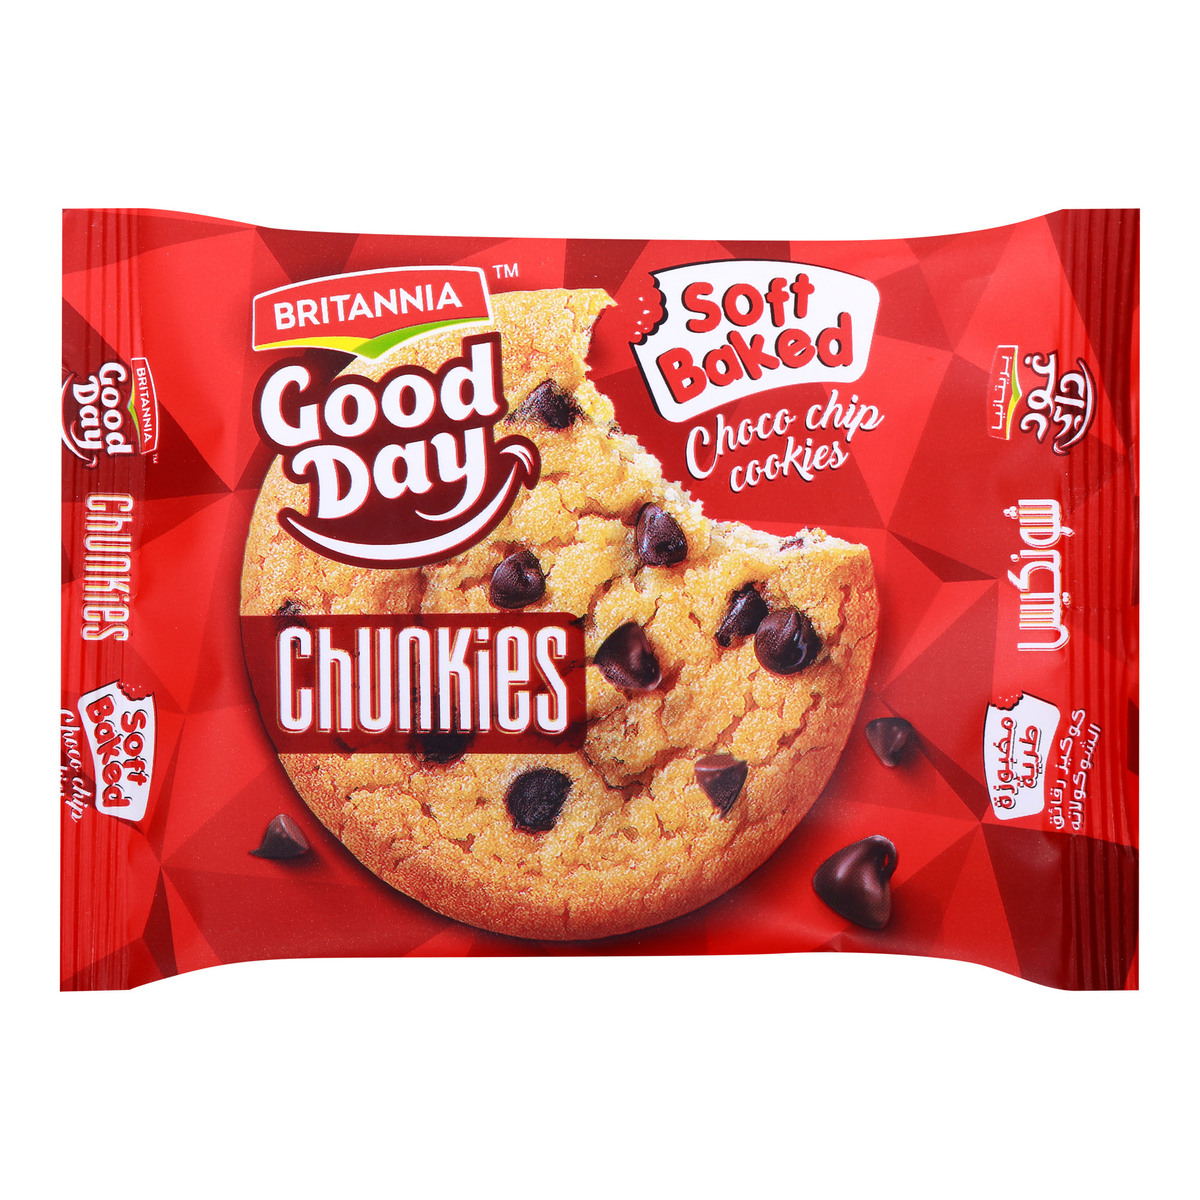 Britannia Good Day Soft Baked Choco Chip Cookies, 28 g